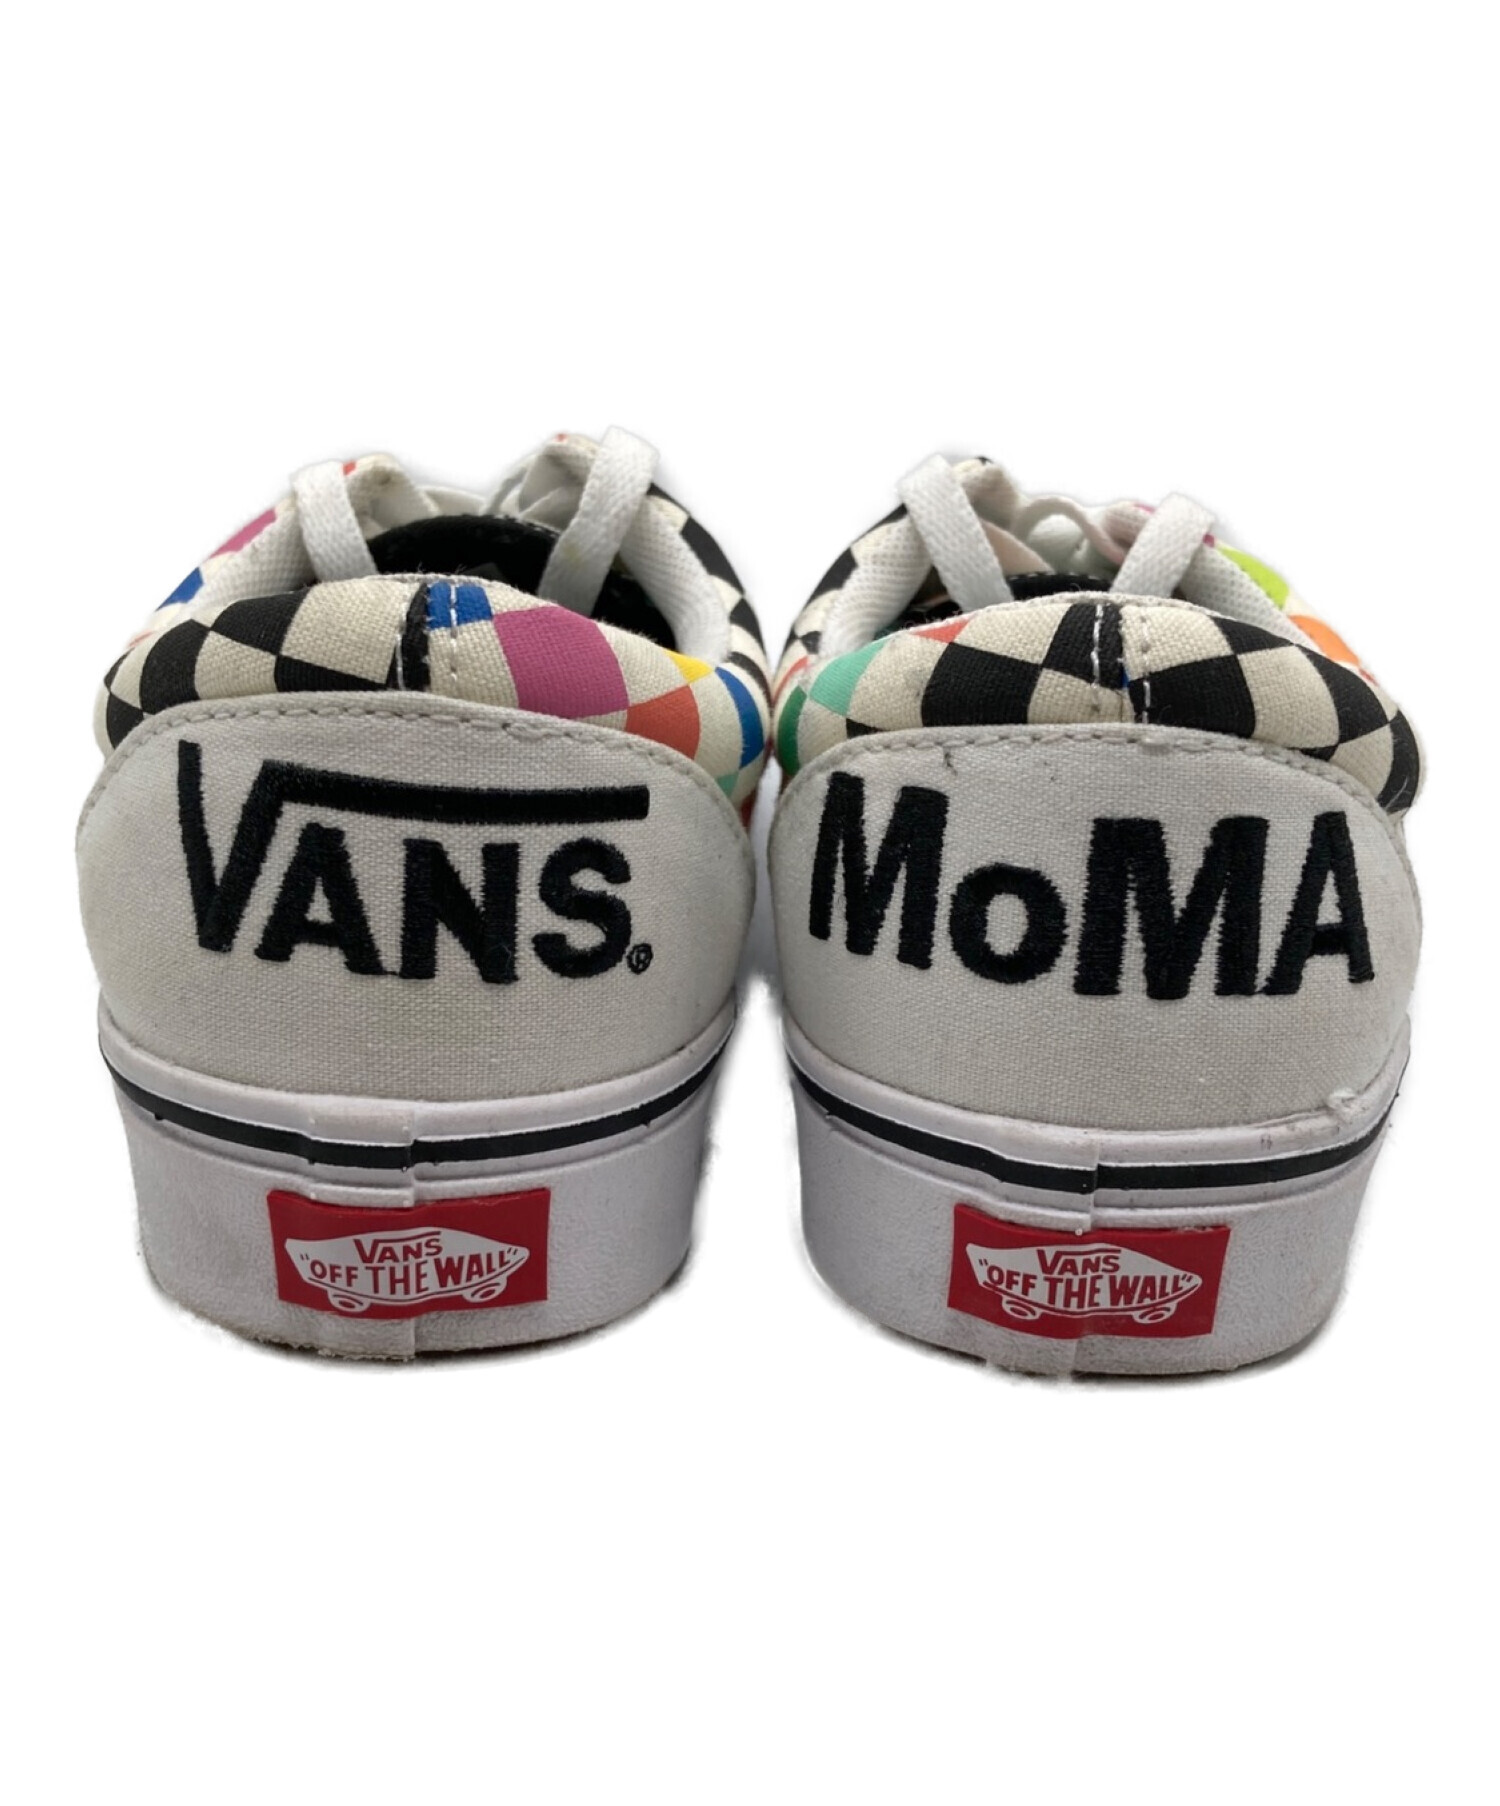 VANS (ヴァンズ) MoMA (モマ) スニーカー サイズ:25